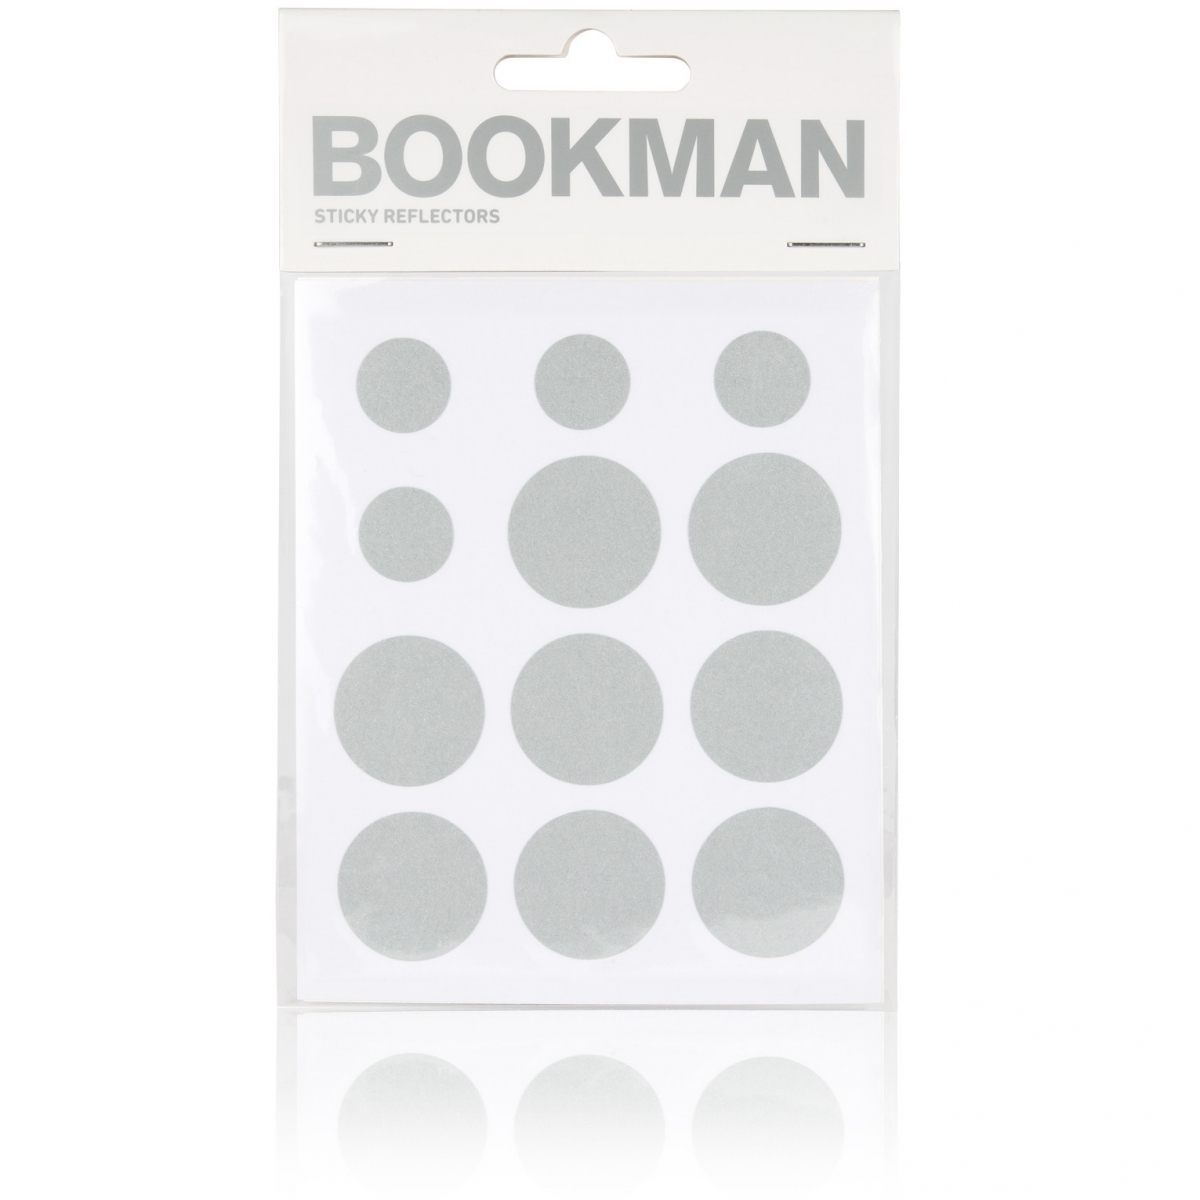 bookman-samolepici-reflexni-odrazky-red-od-bookman-1.jpg